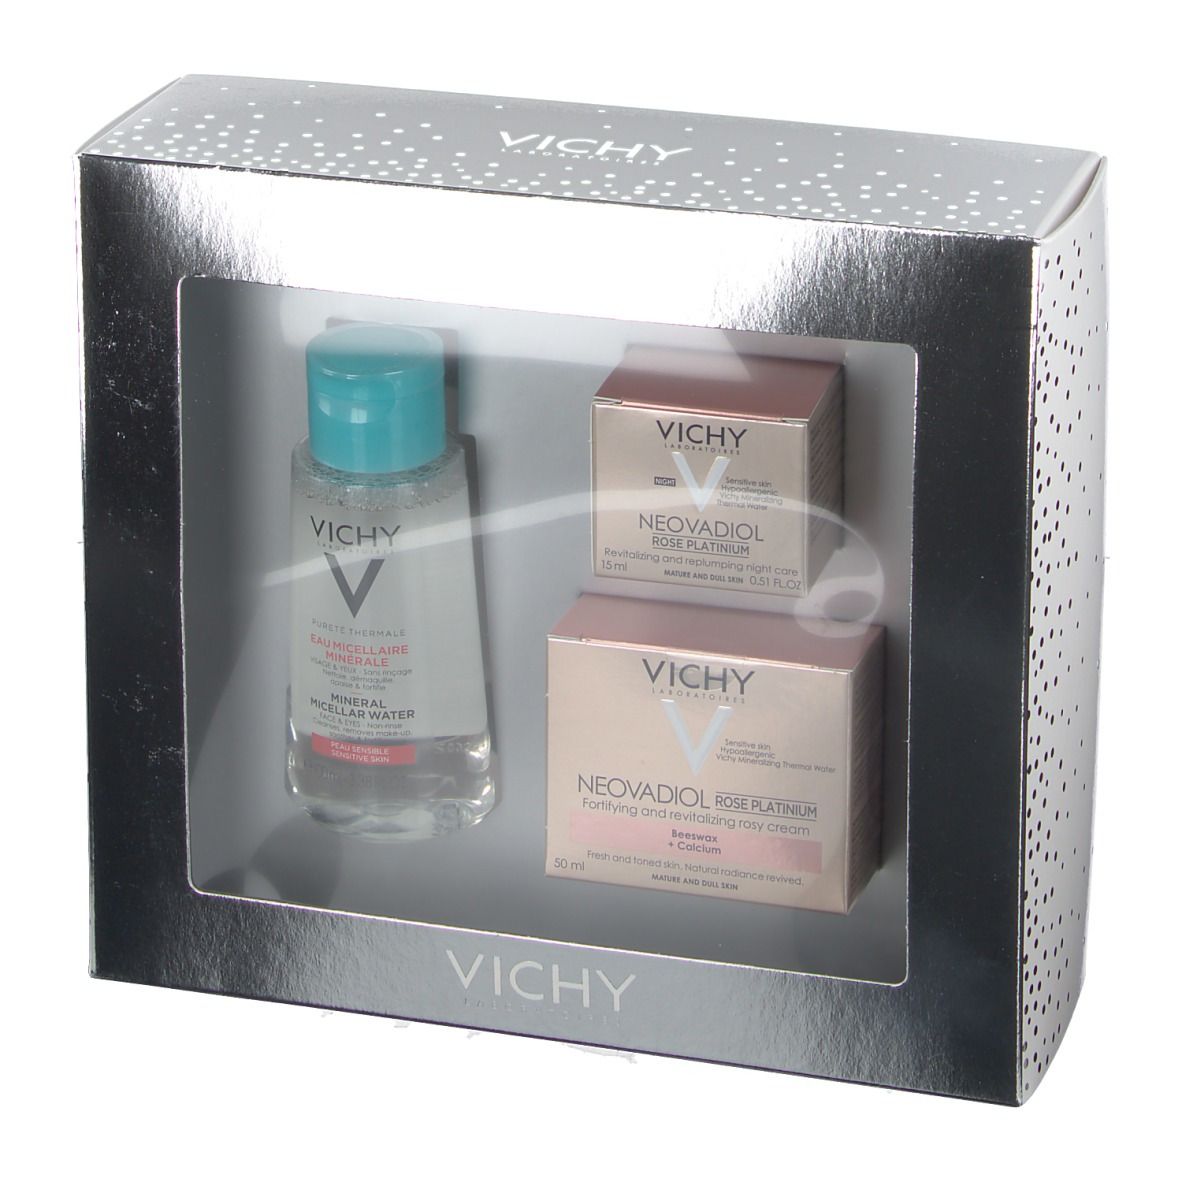 Vichy Neovadiol Rose Platinum Gift Set